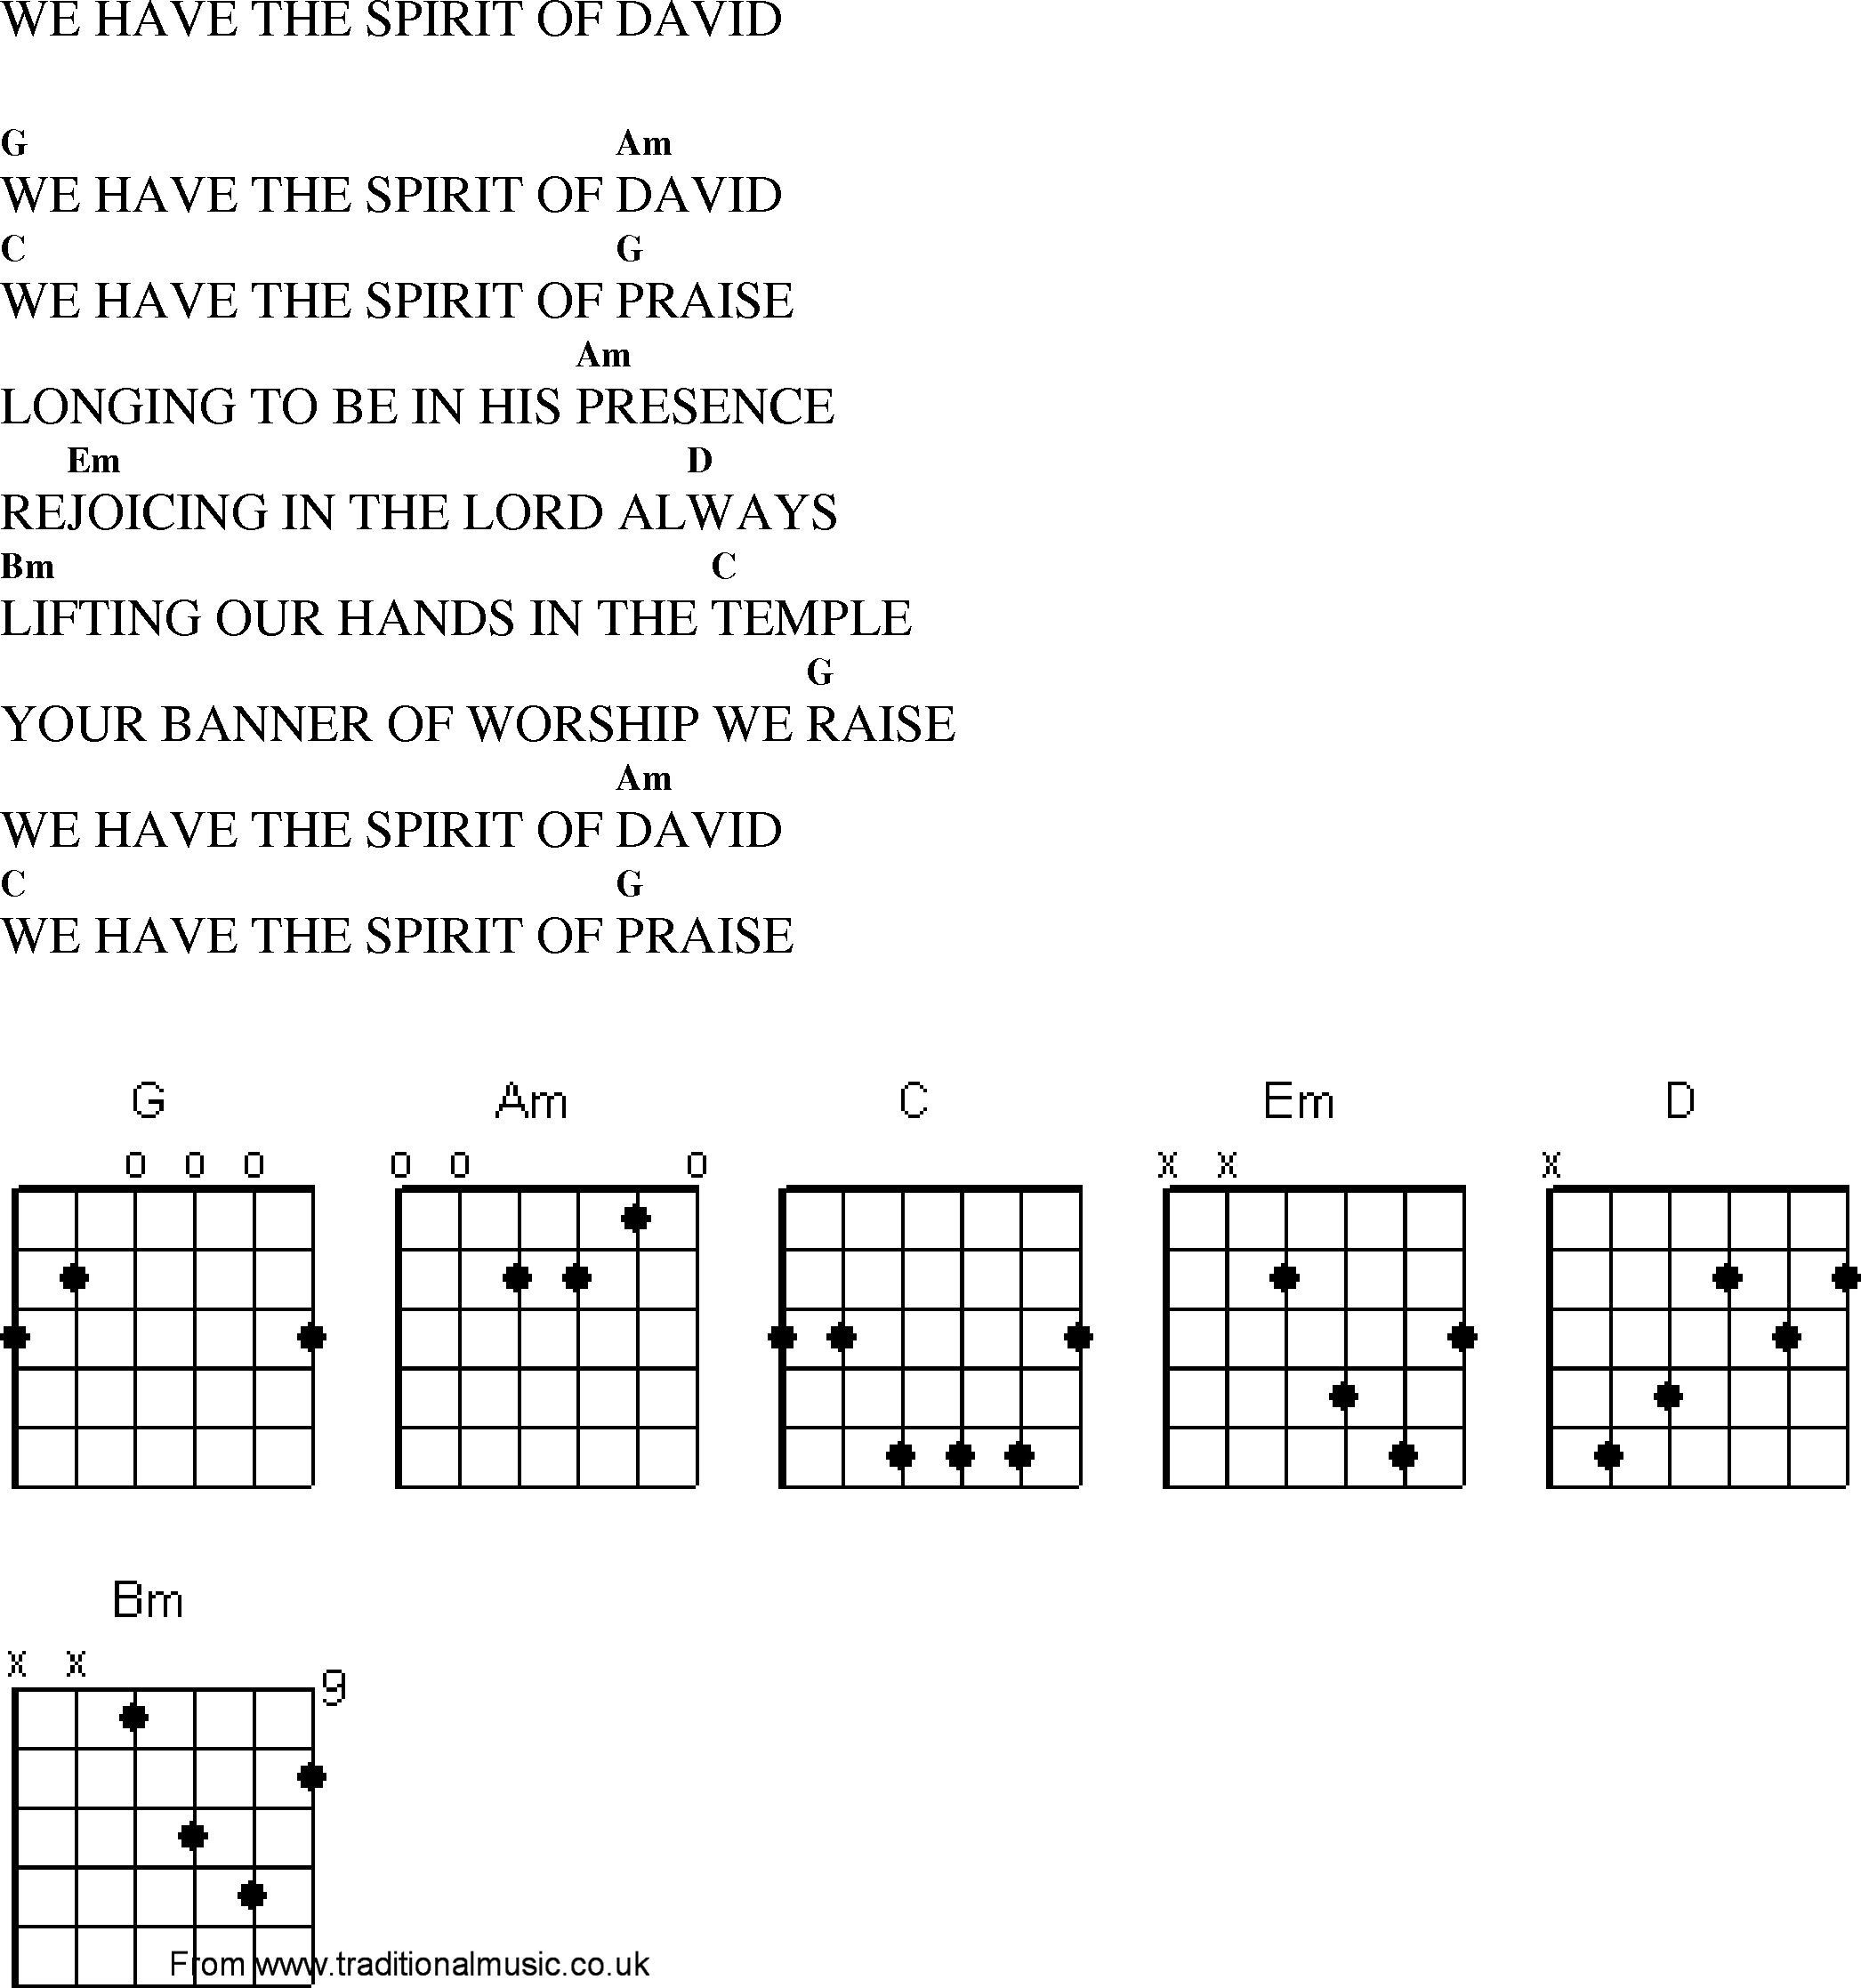 Gospel Song: we_have_the_spirit_of_david, lyrics and chords.